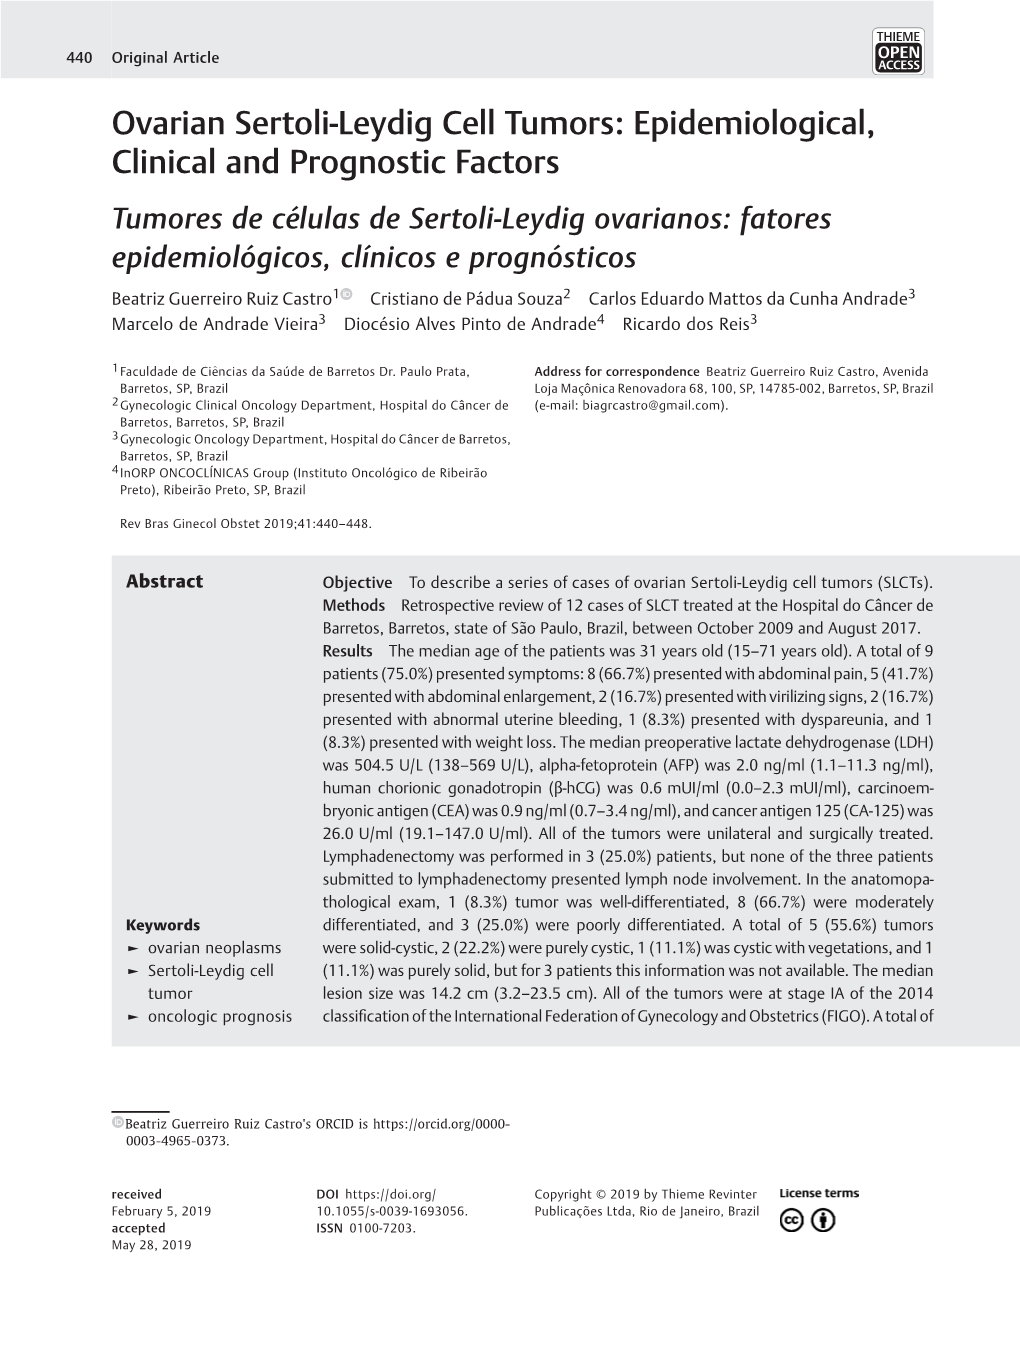 Ovarian Sertoli-Leydig Cell Tumors: Epidemiological, Clinical and Prognostic Factors